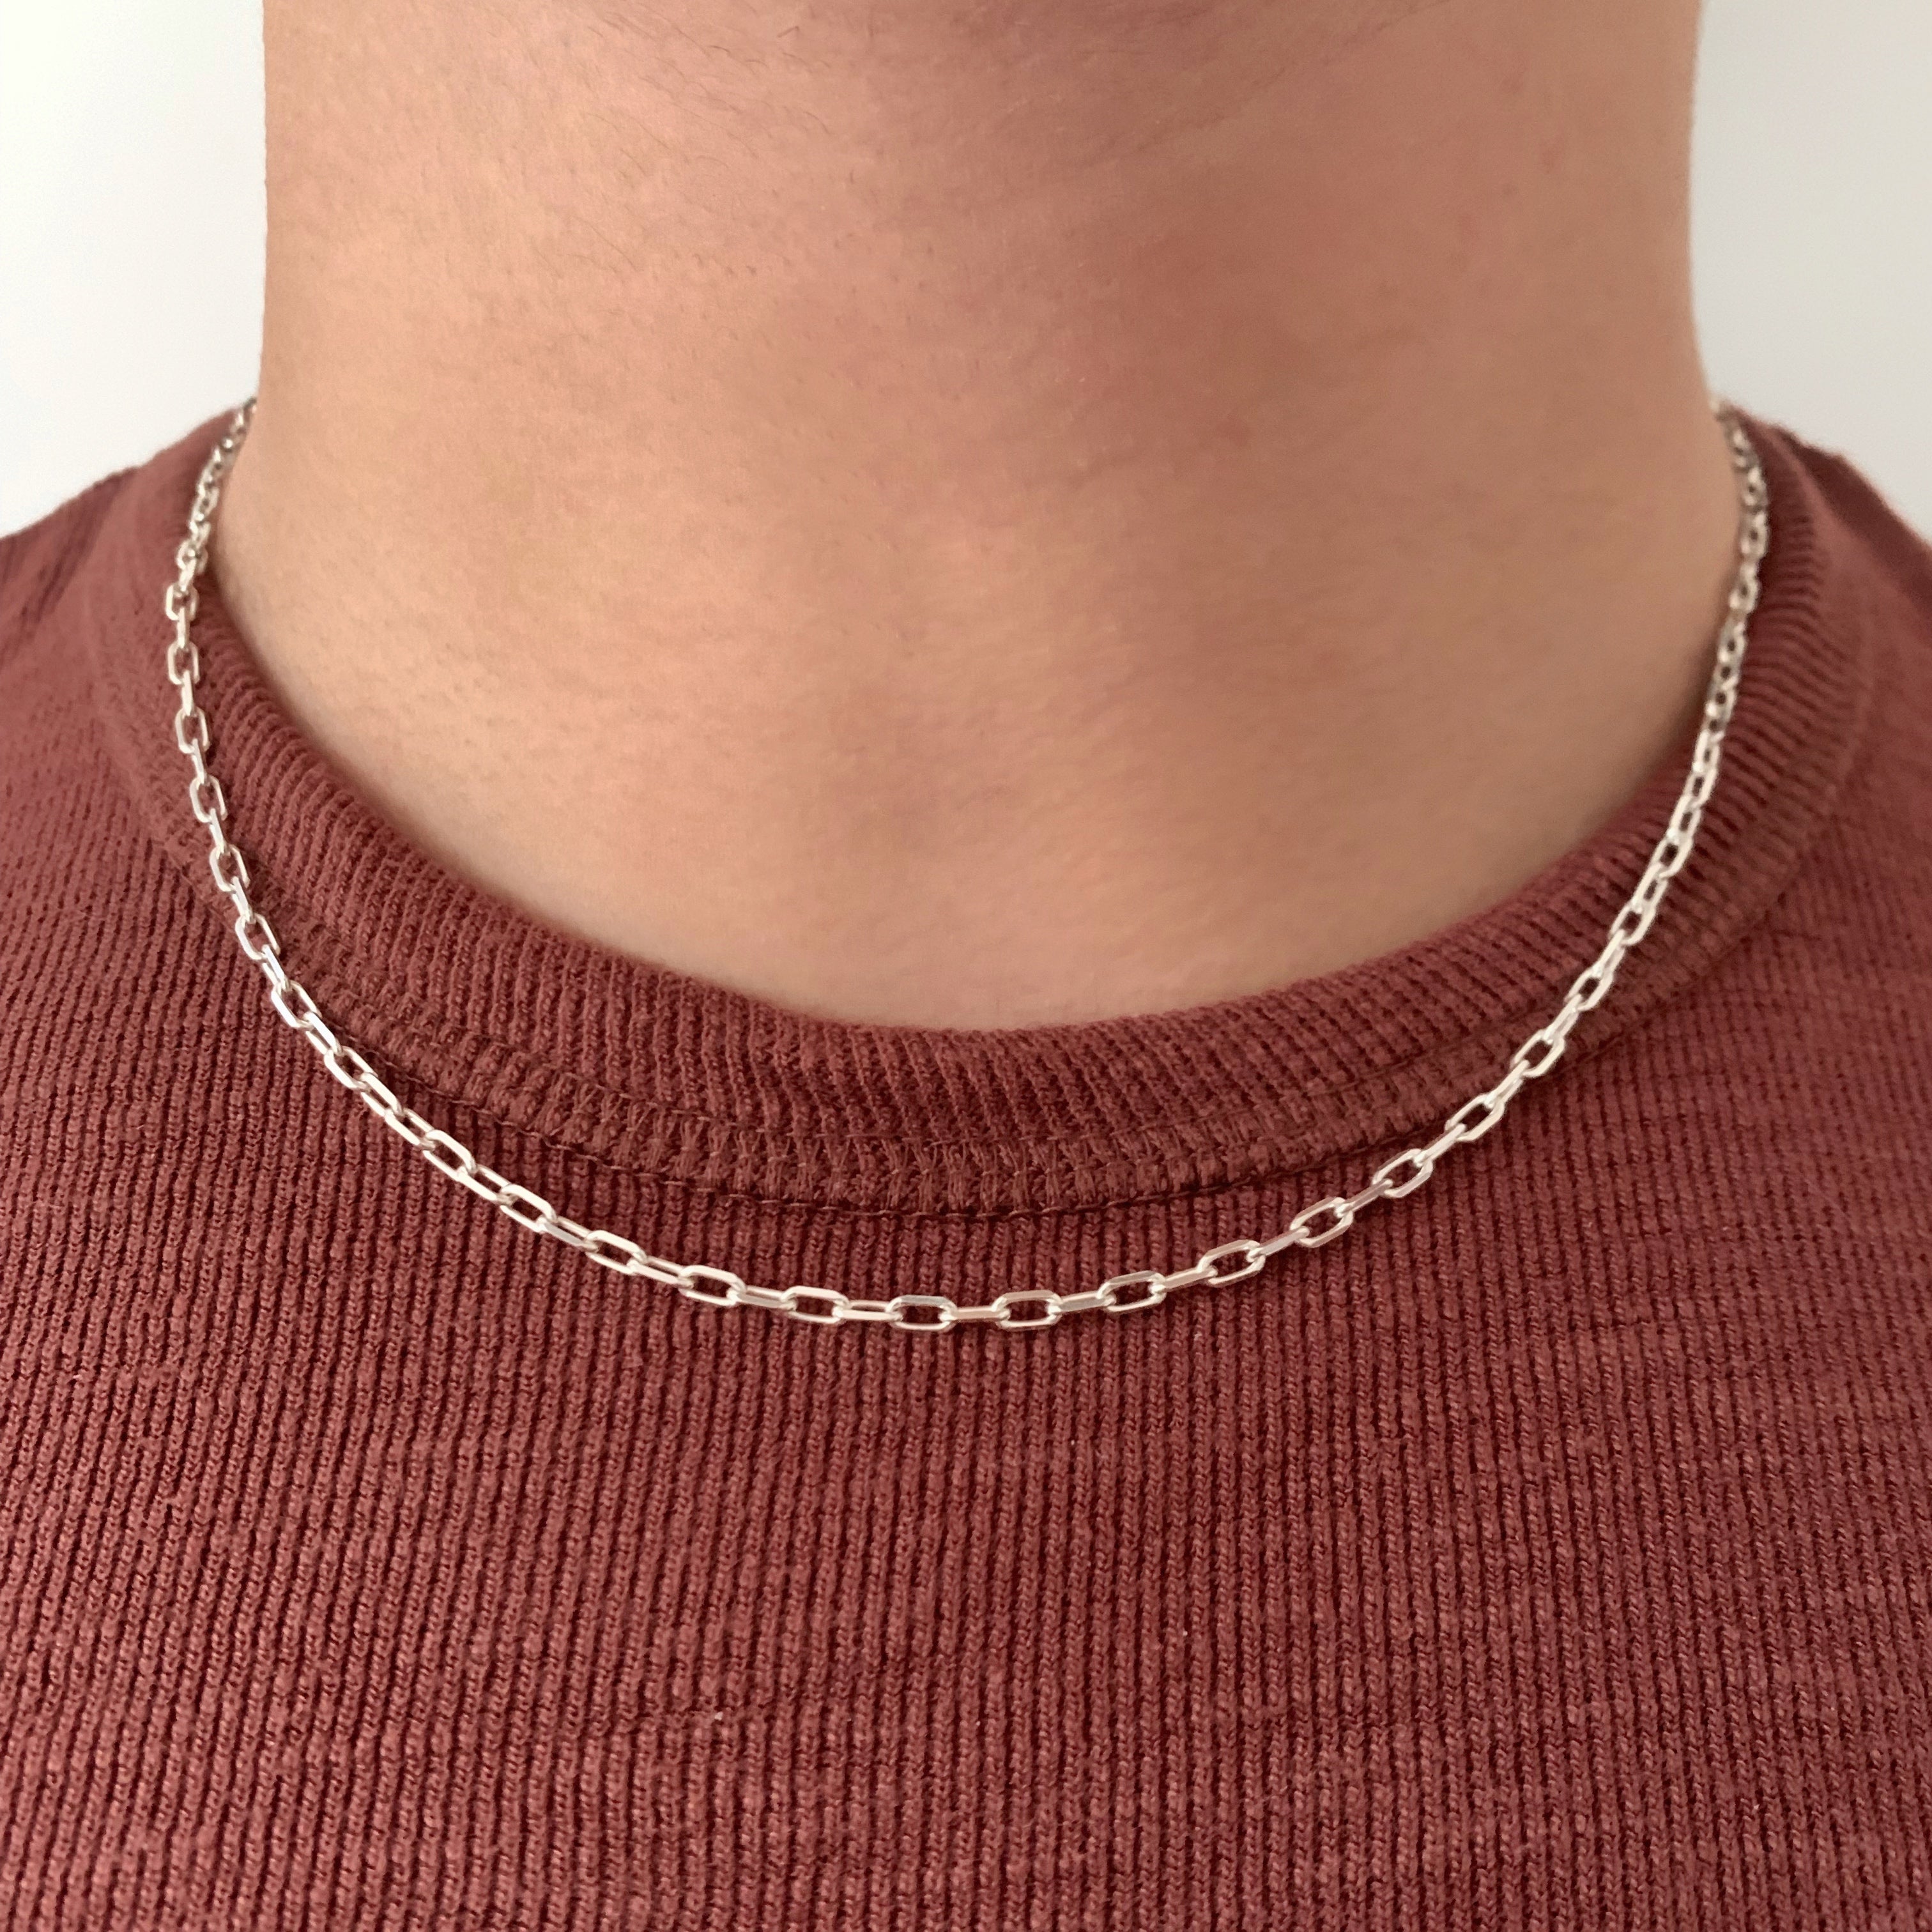 Clip necklace for men